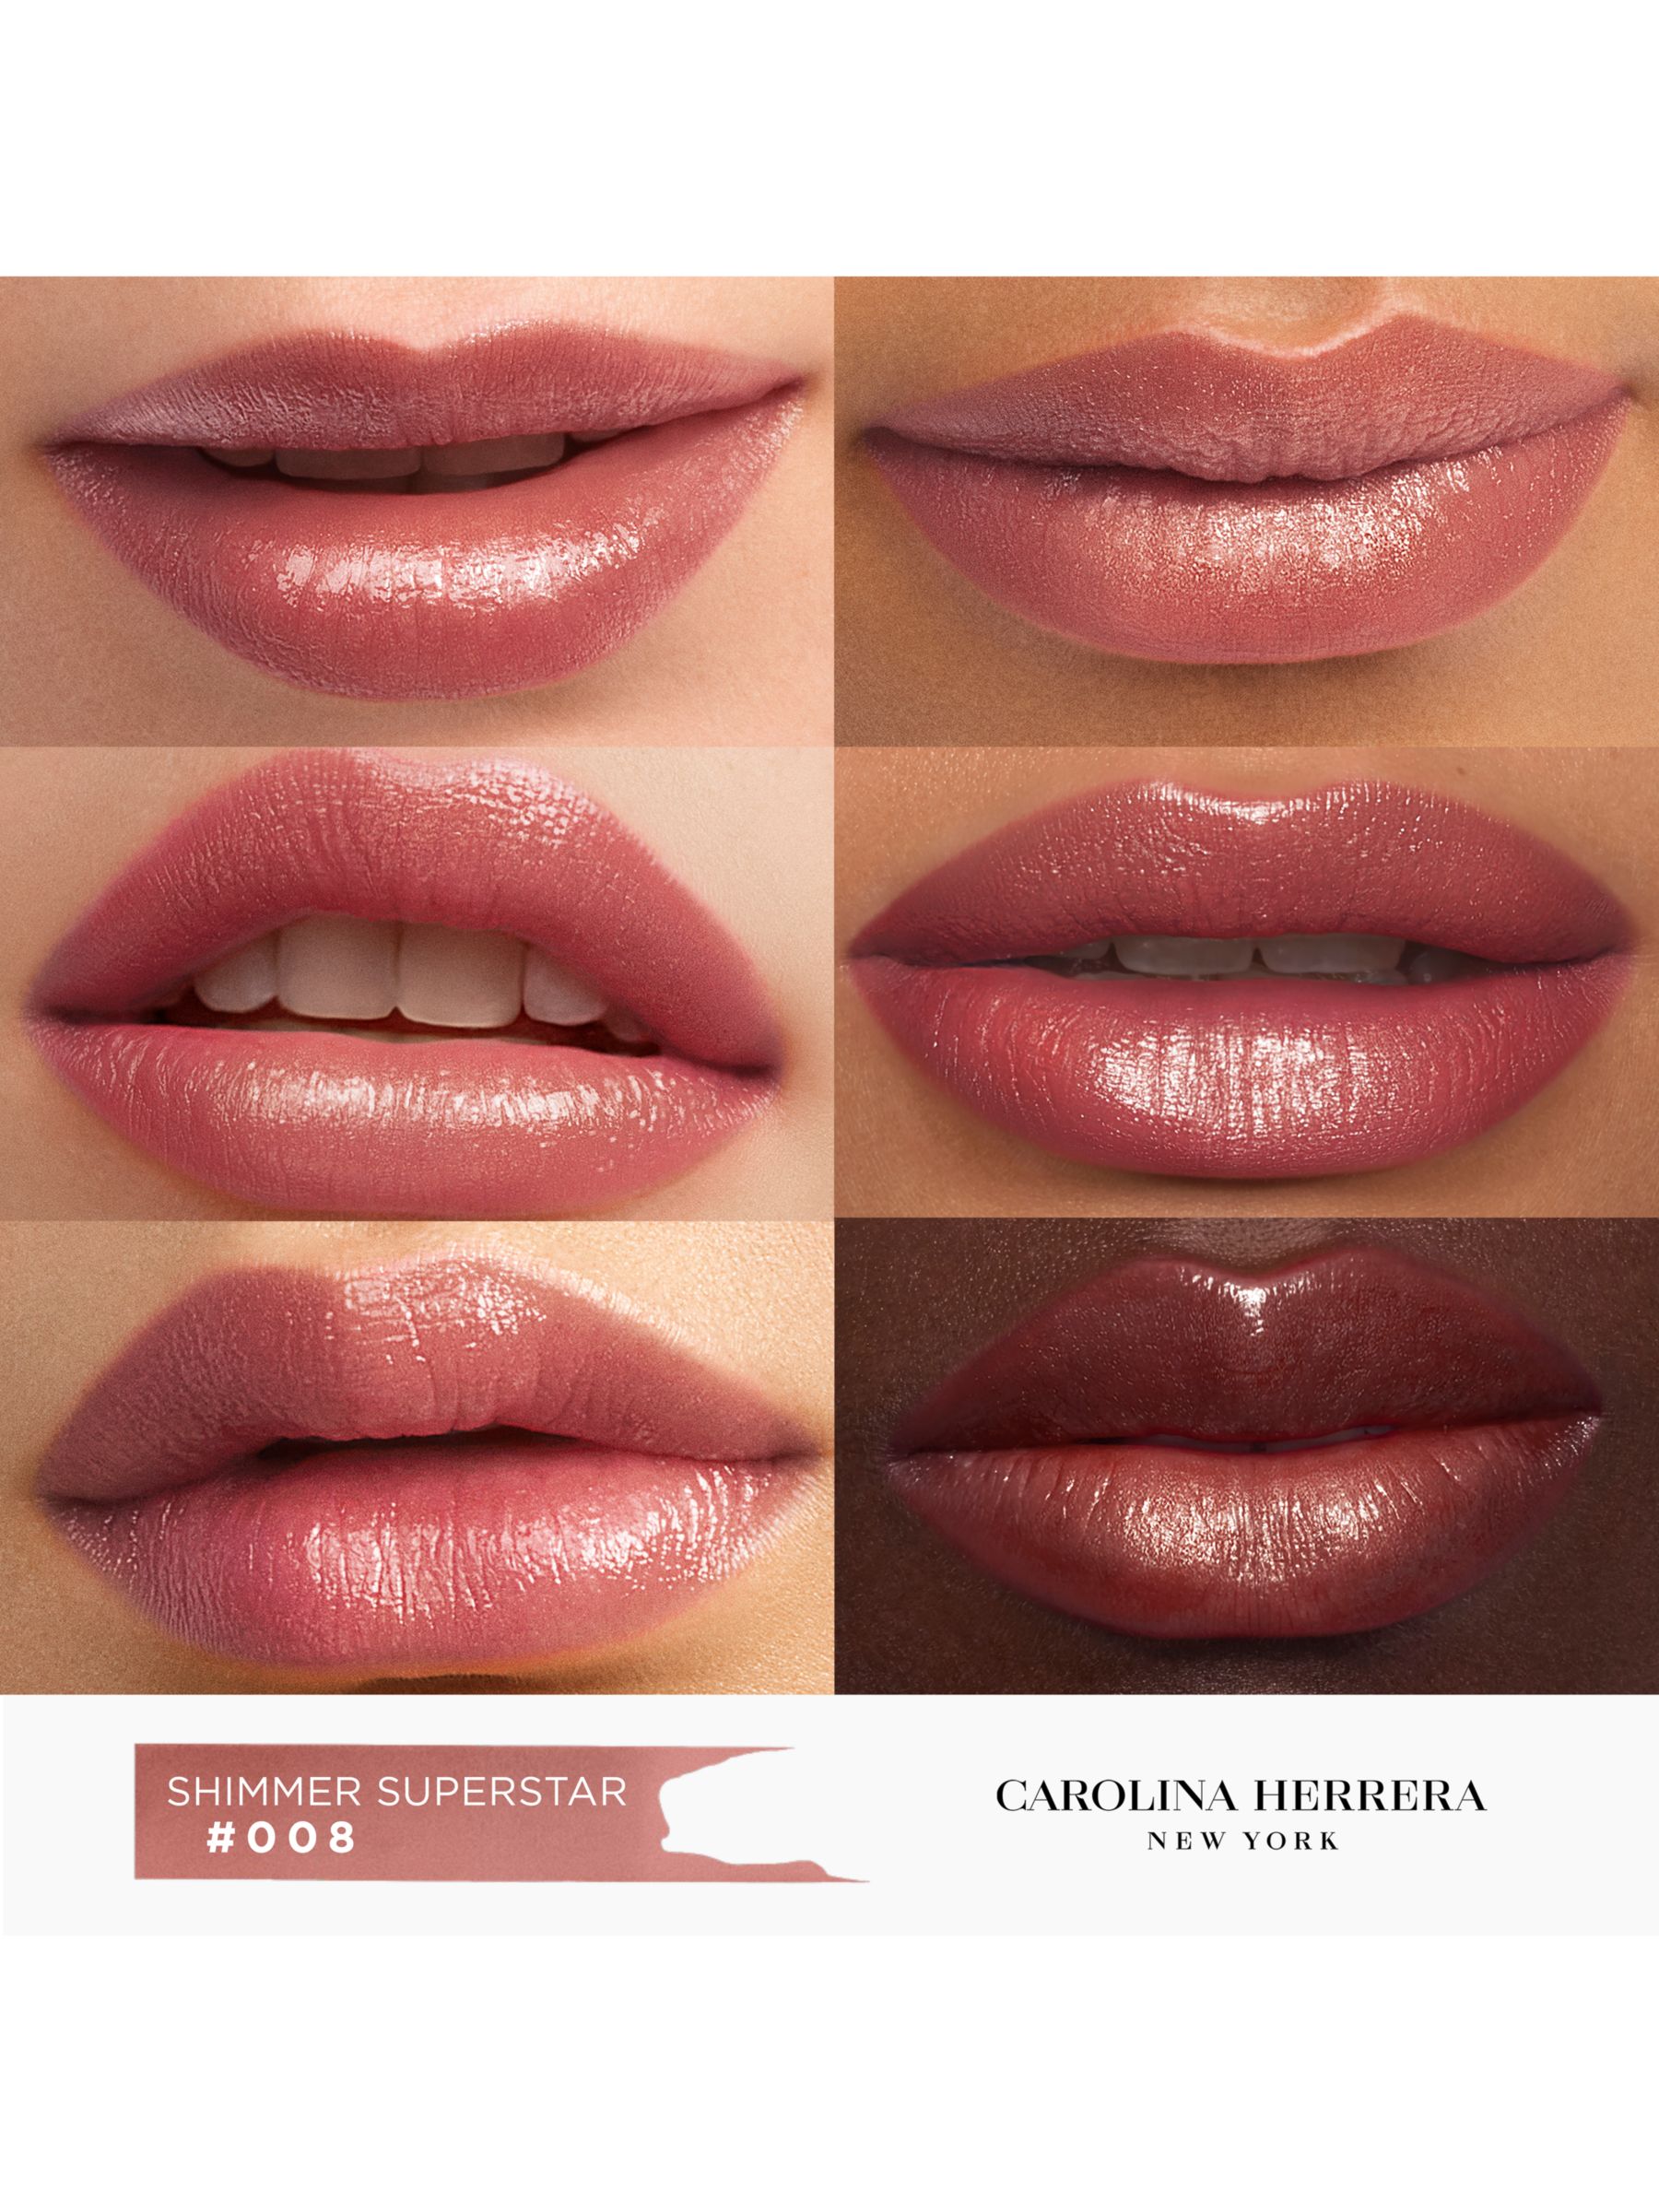 Carolina Herrera Good Girl Mini Lip Balm Superstar, 008 Sparkling 2